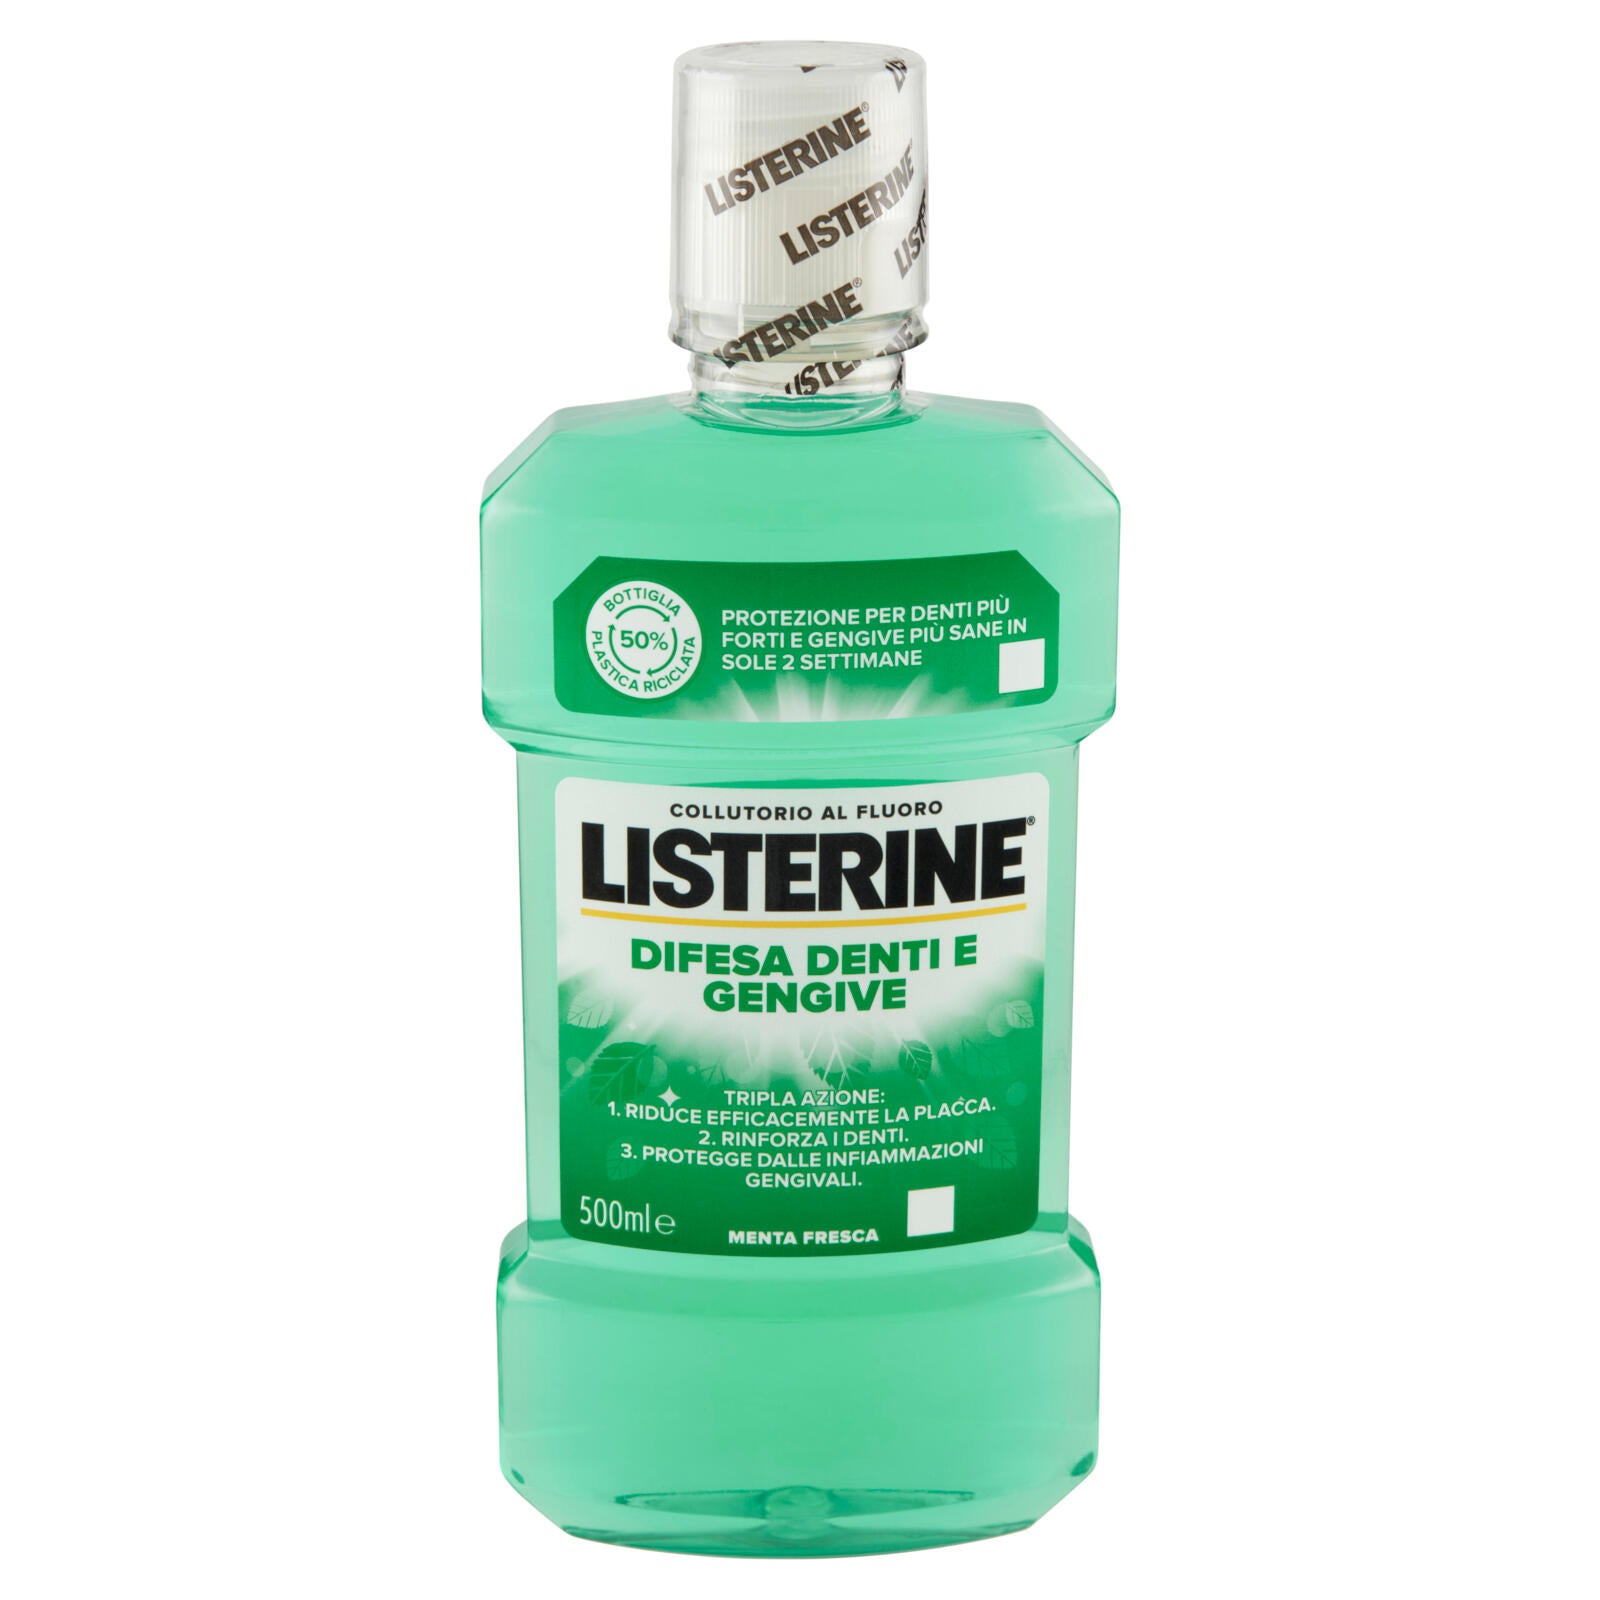 Listerine Difesa Denti e Gengive Menta Fresca 500 ml